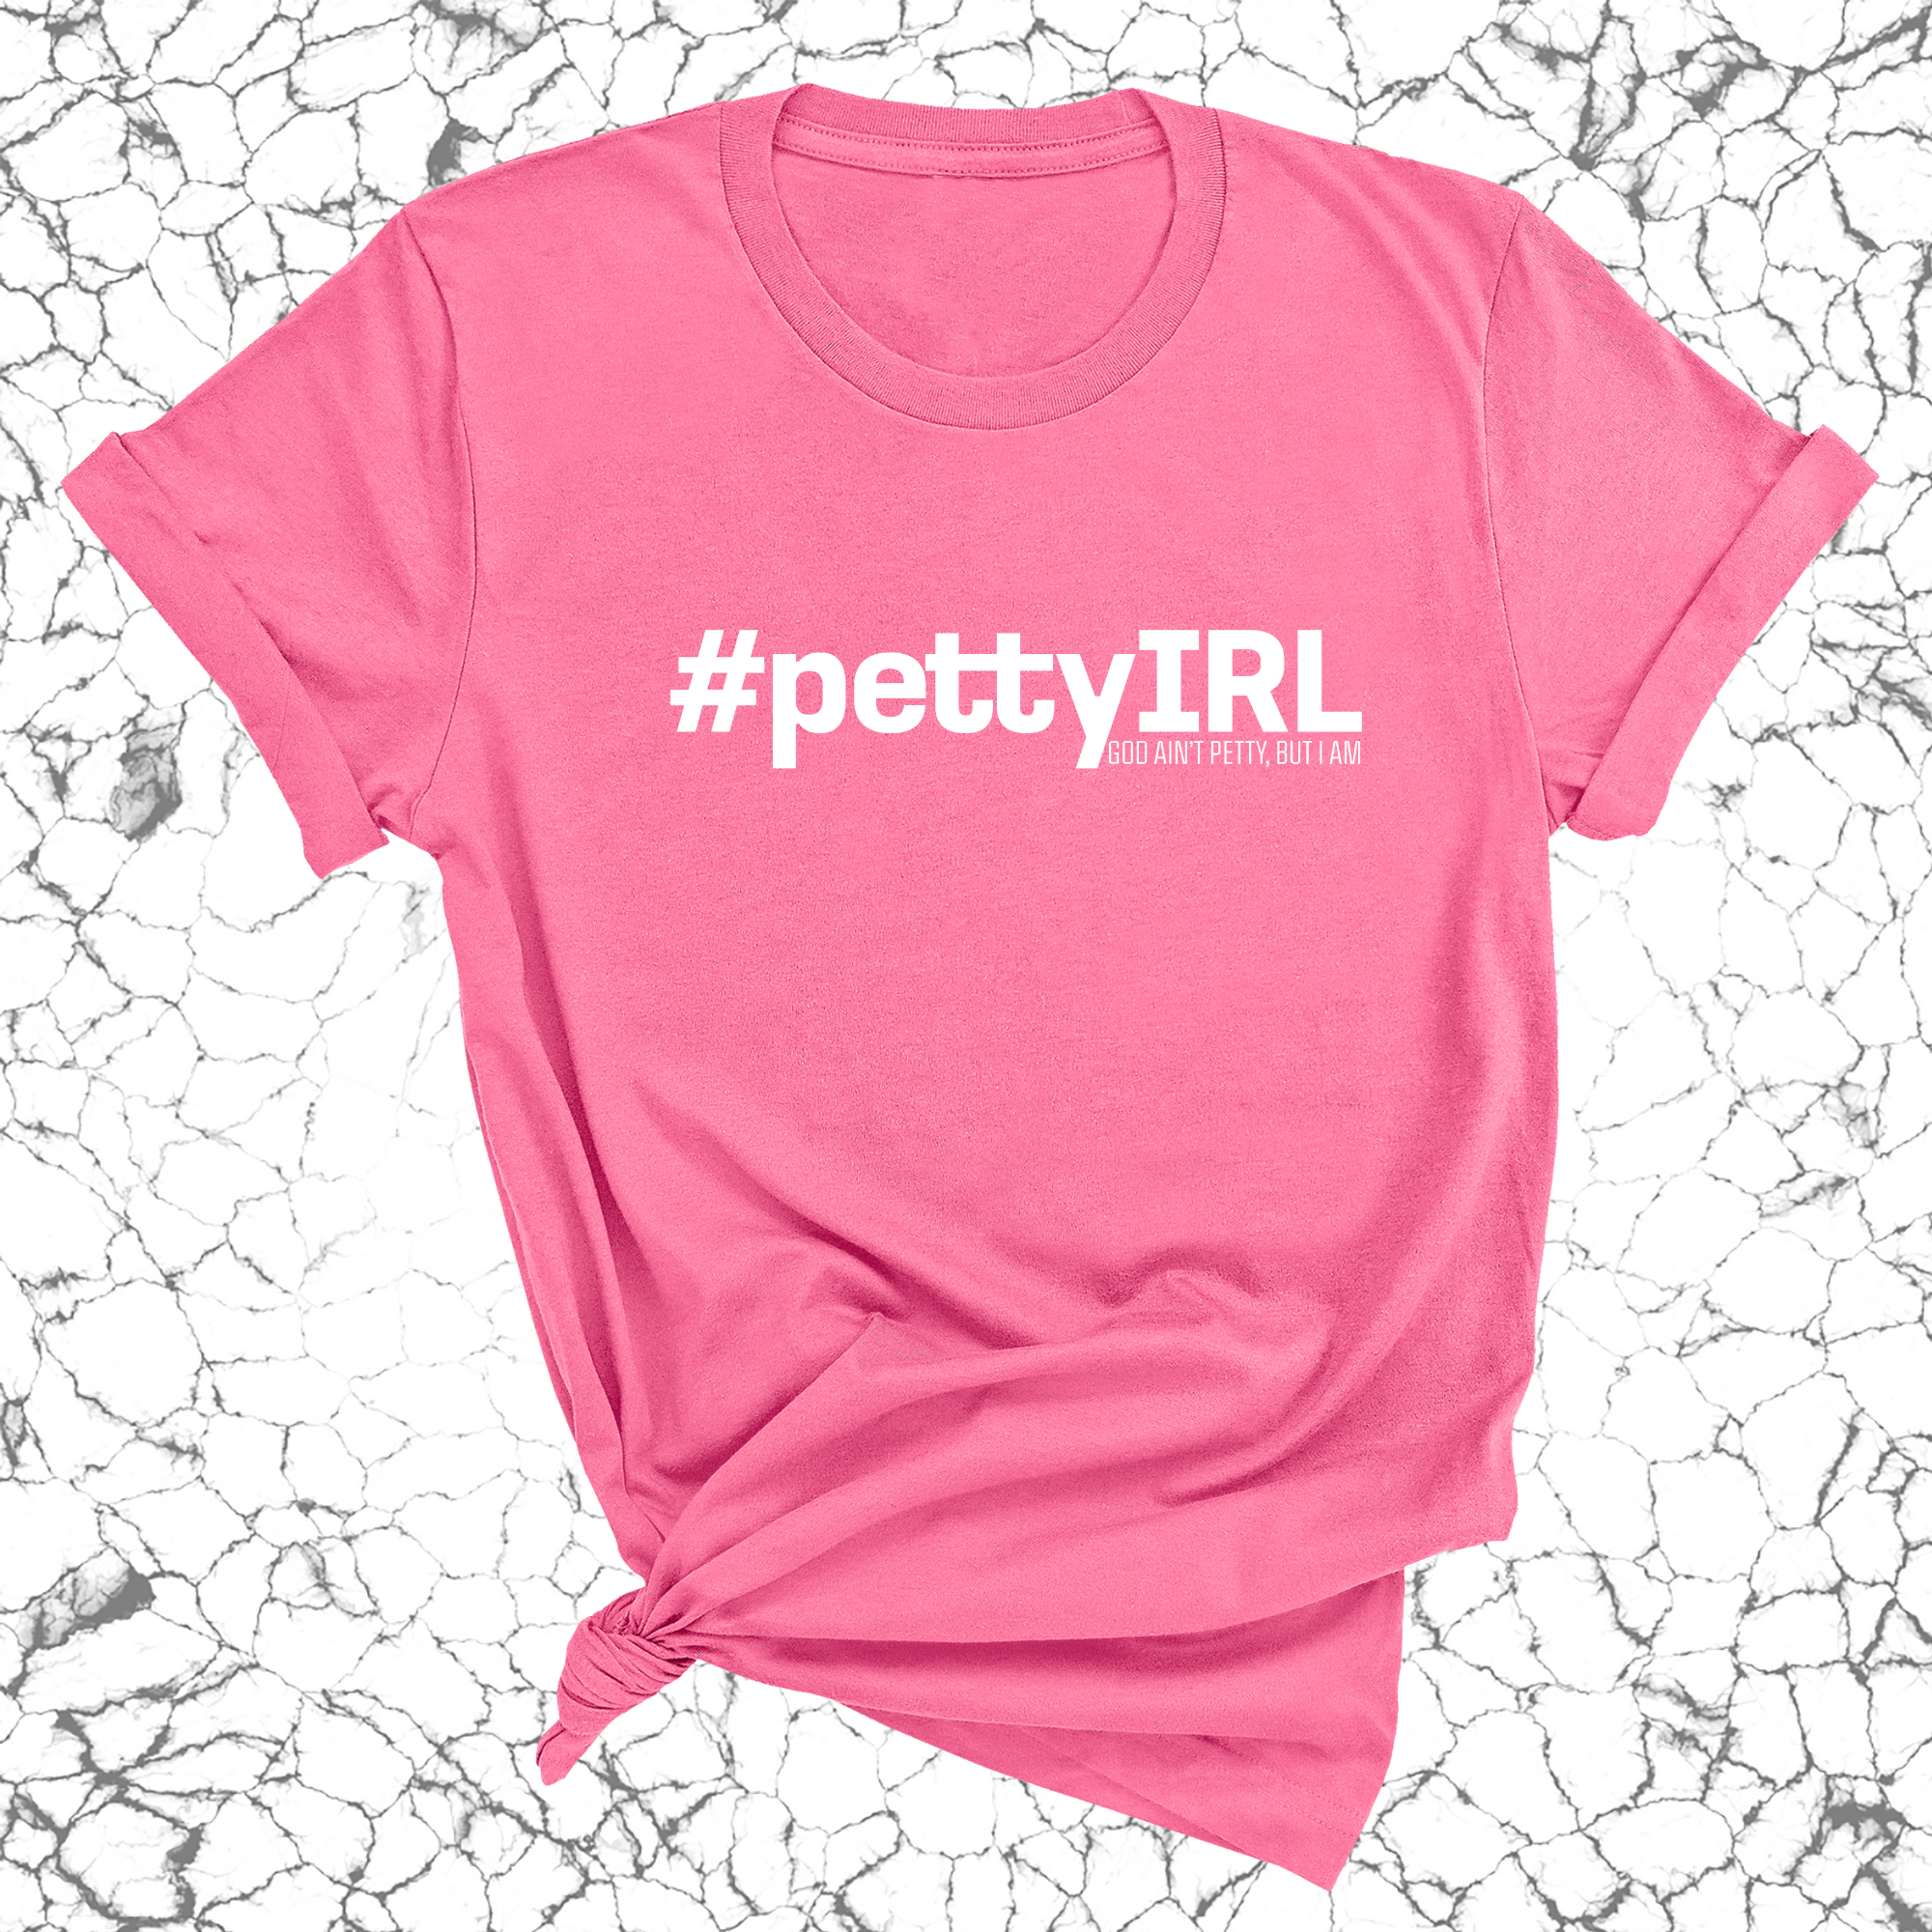 PETTY IRL Unisex Tee-T-Shirt-The Original God Ain't Petty But I Am